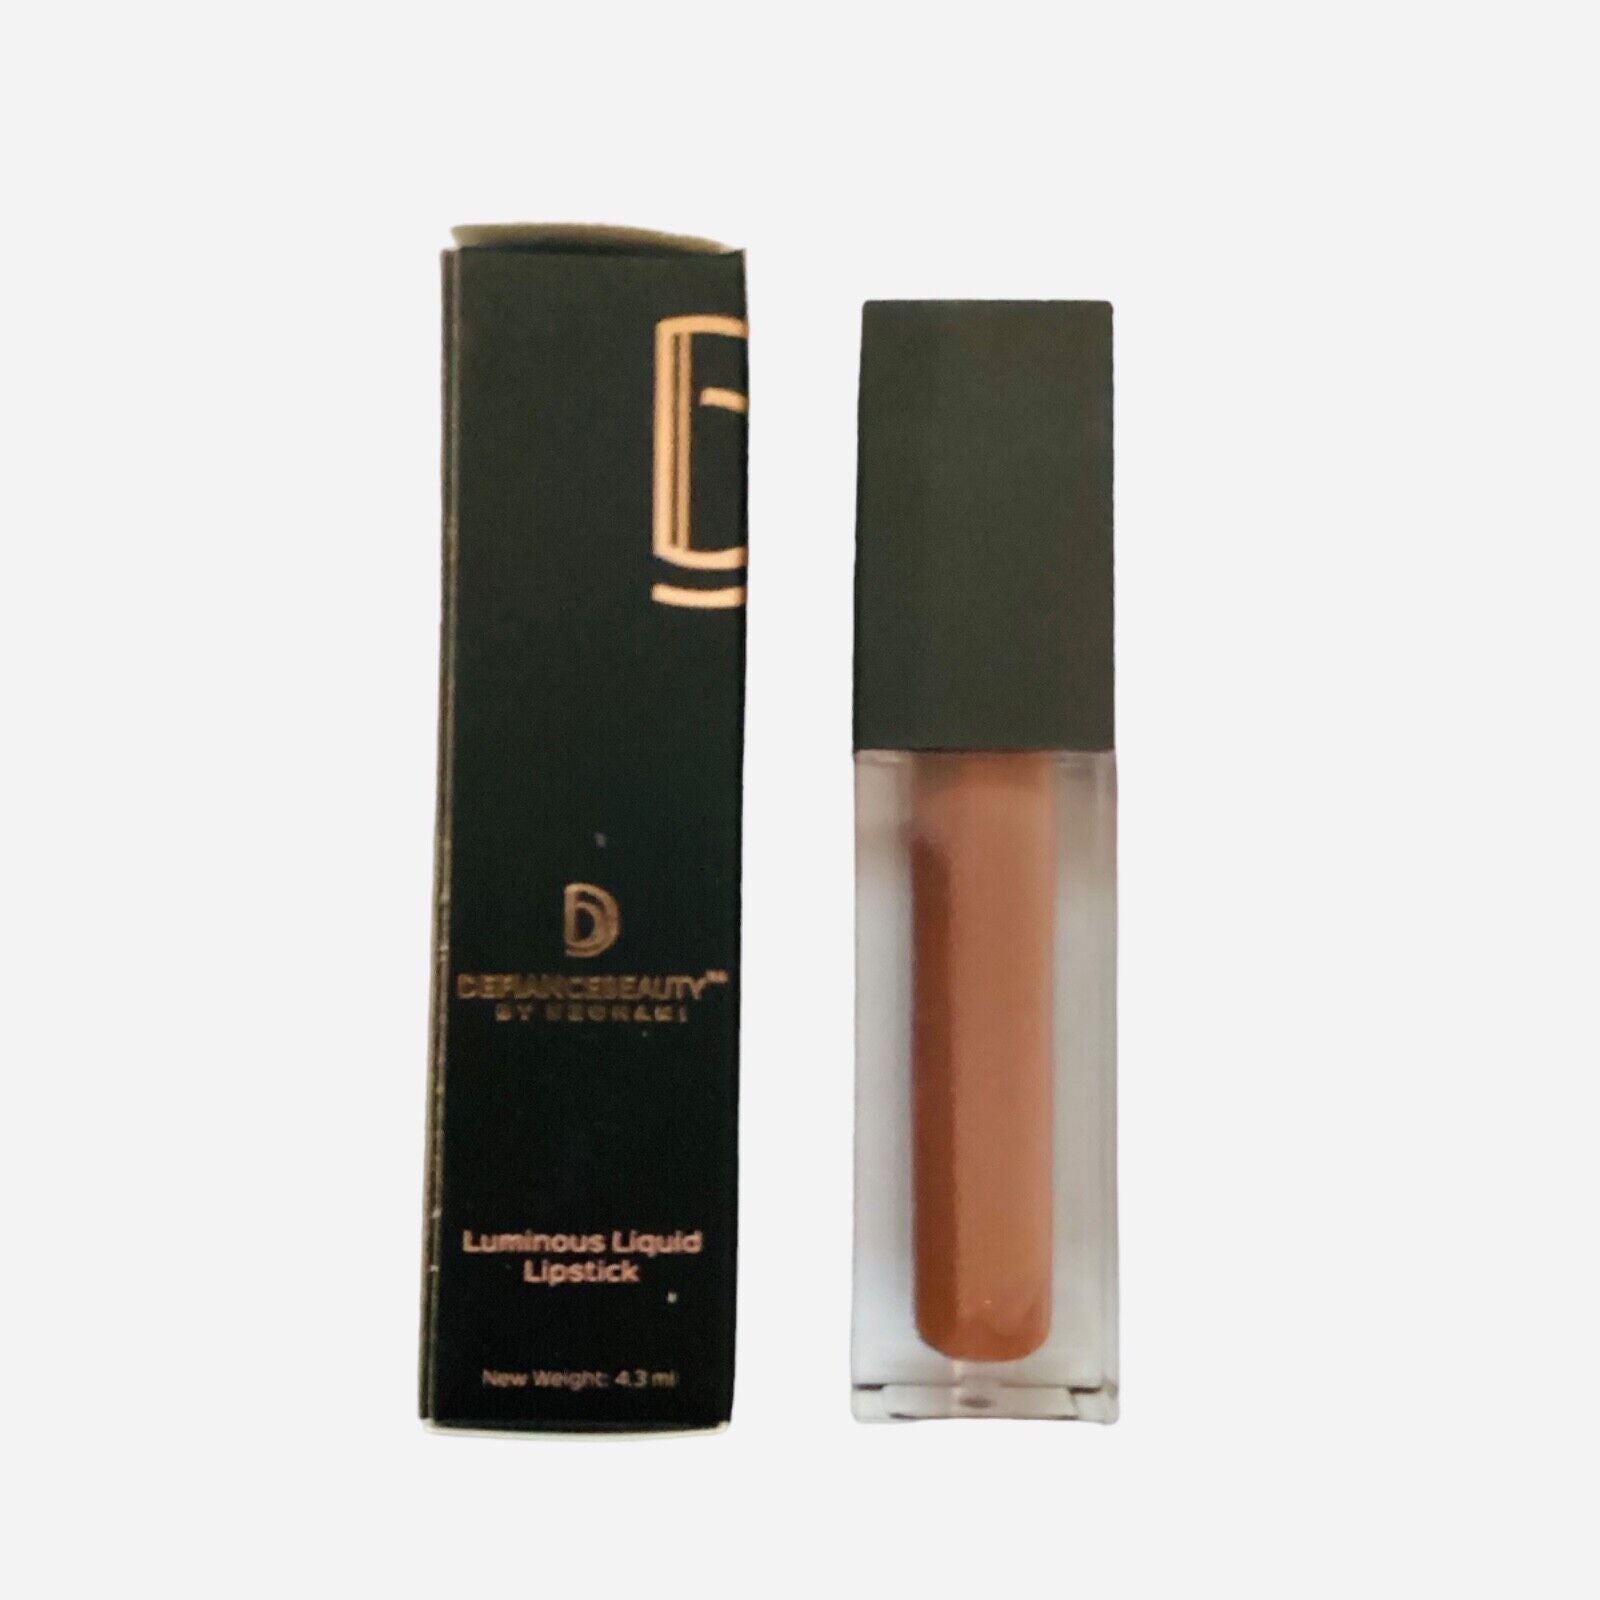 Defiance Beauty Iconic Luminous Liquid Lipstick 4.3ml